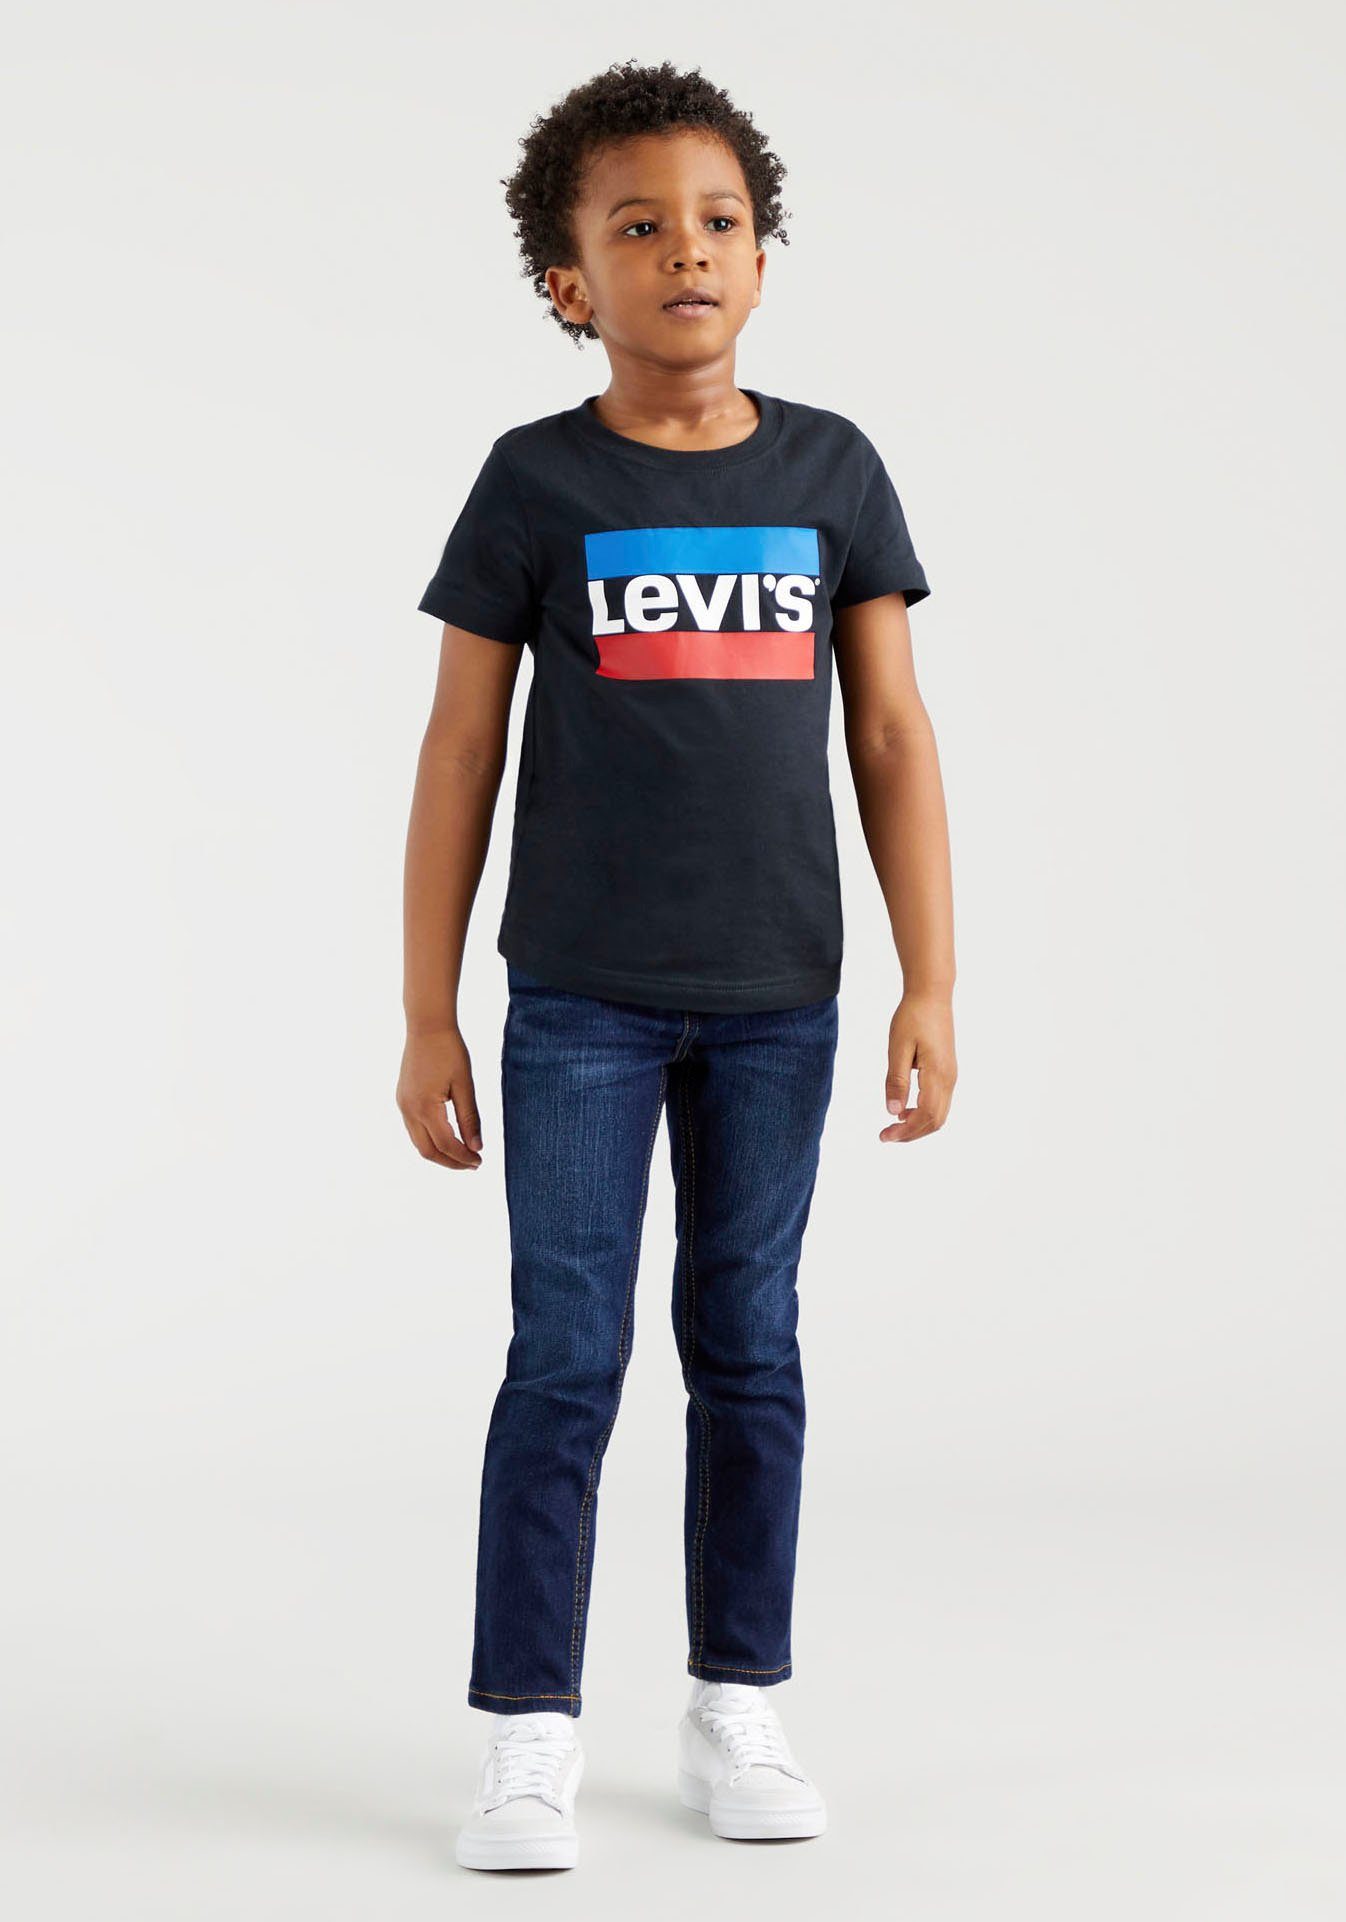 Levi's® Kids SKINNY Skinny-fit-Jeans for used BOYS dark-blue FIT JEANS 510